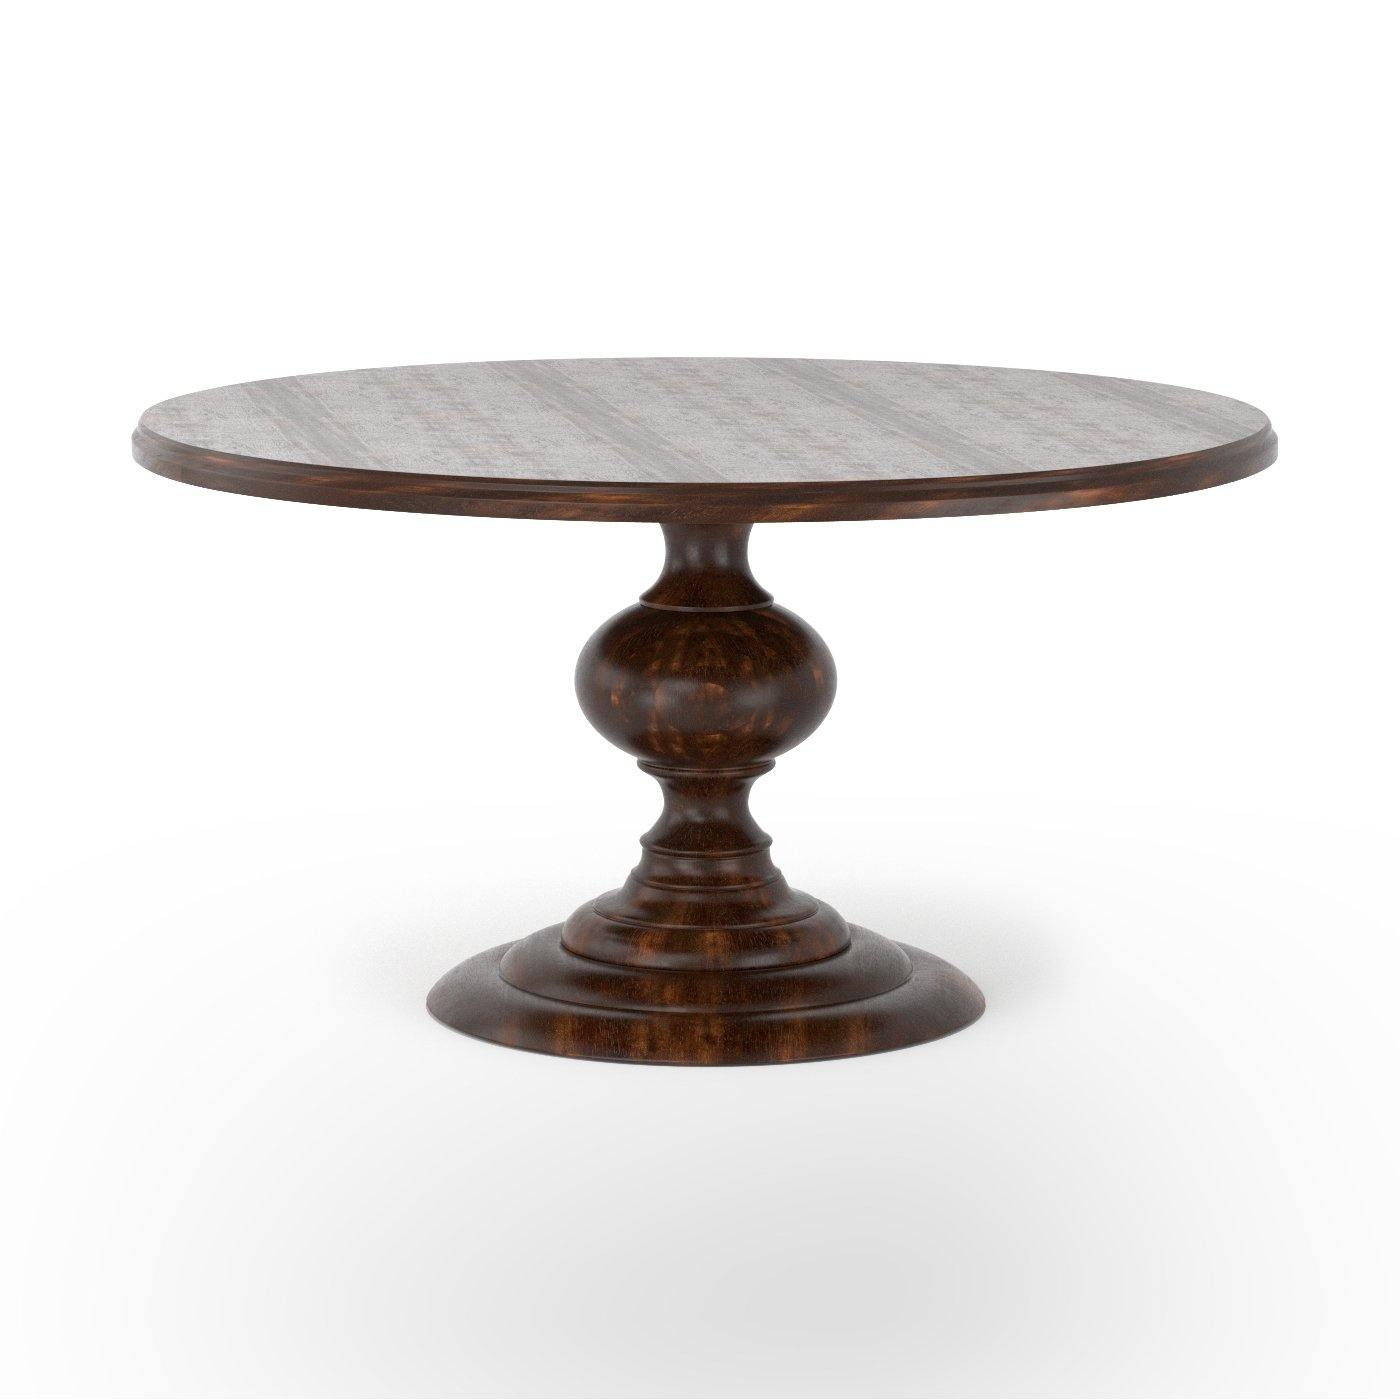 Magnolia Round Dining Table, Dark Stain - Reimagine Designs - dining table